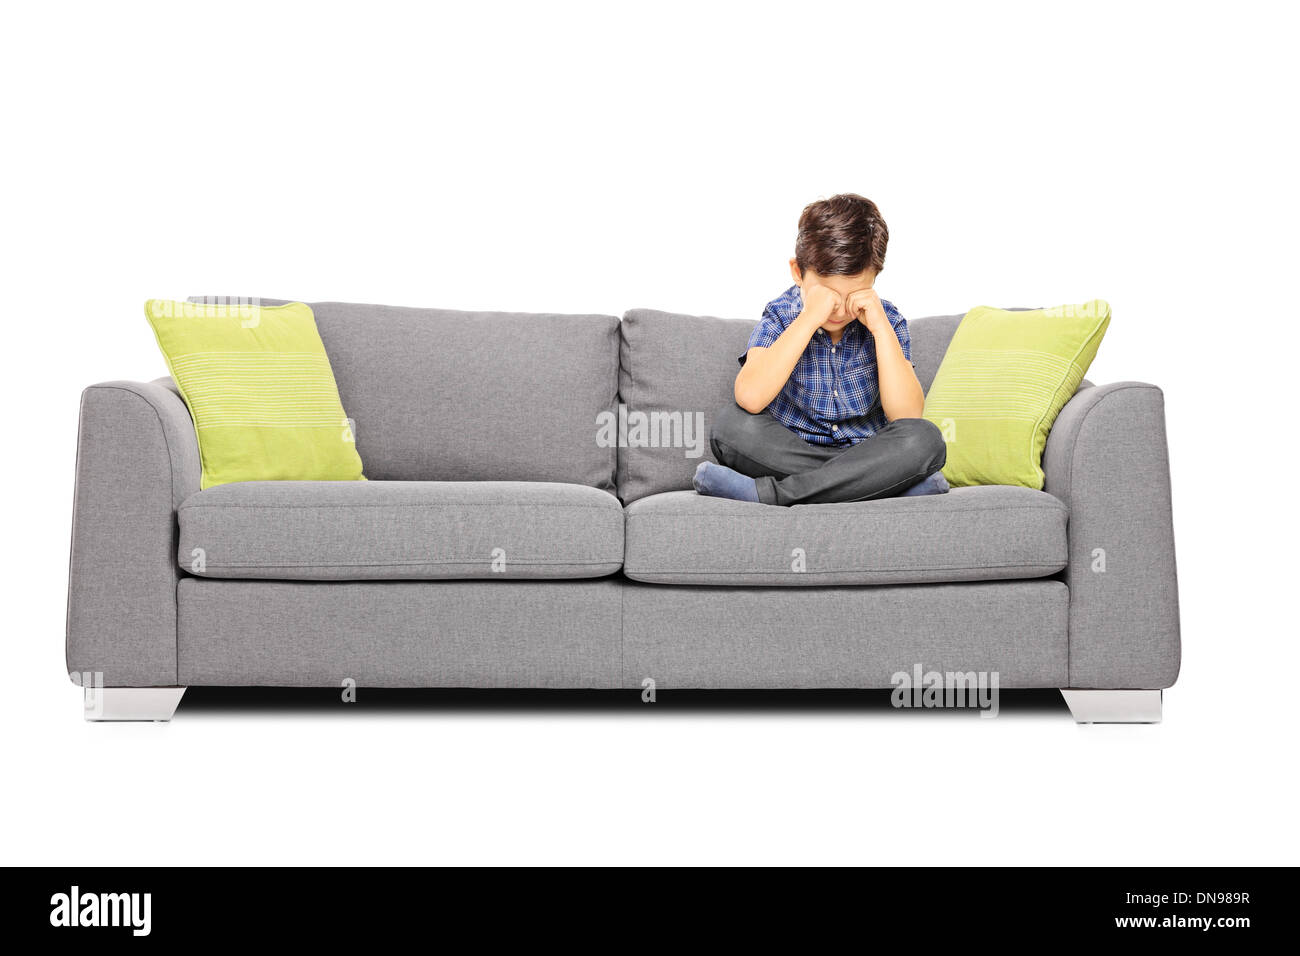 Sad boy sitting on a sofa and crying Stock Photo